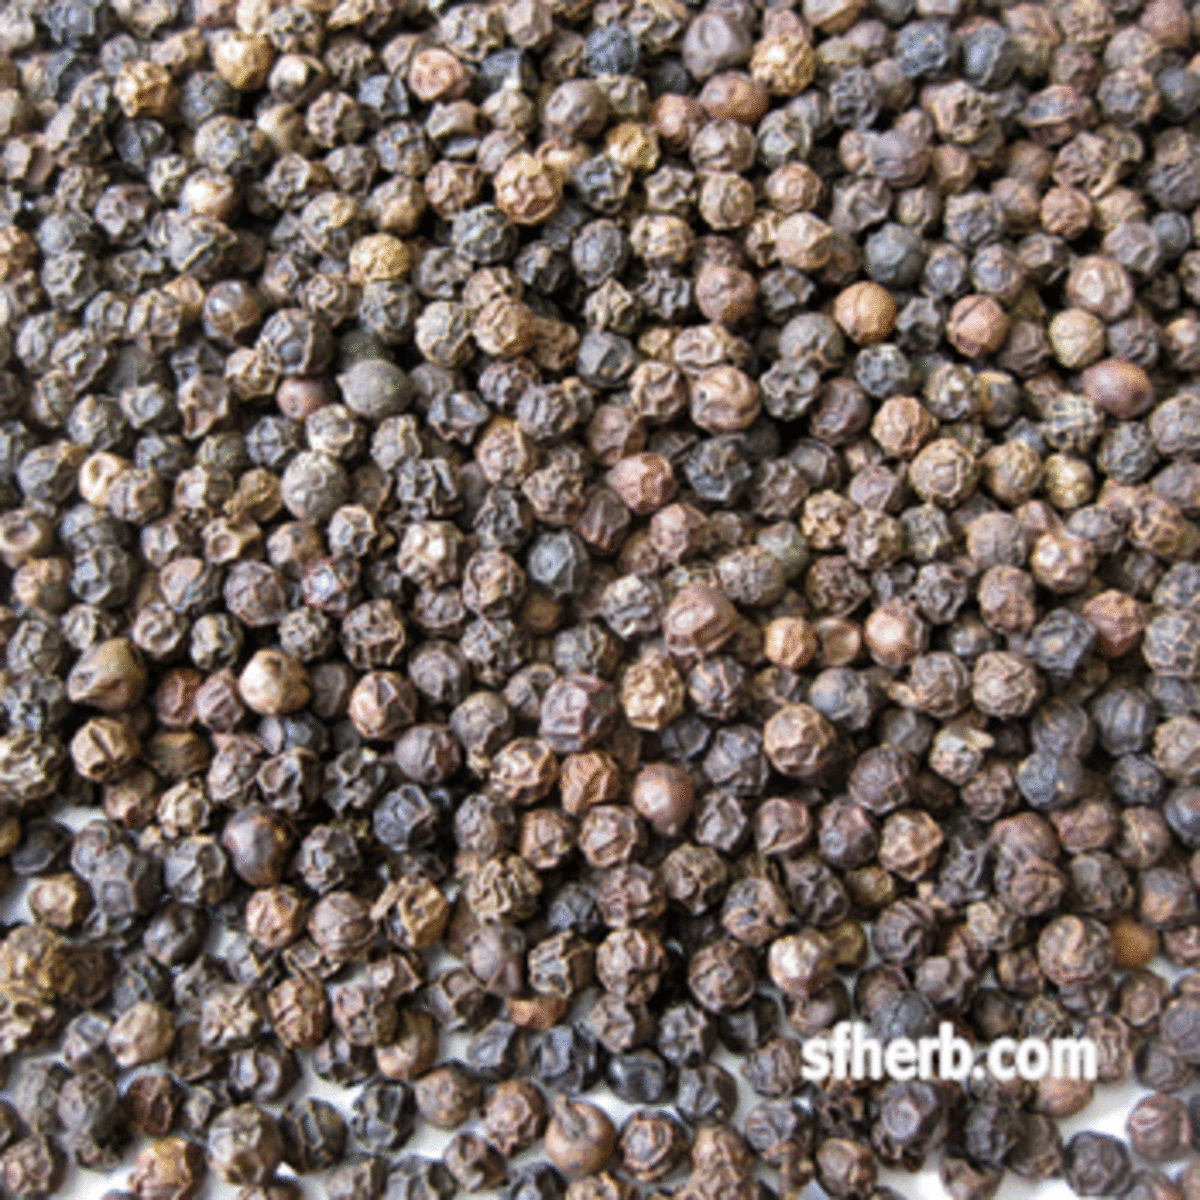 Black Peppercorns from San Francisco Herb Company